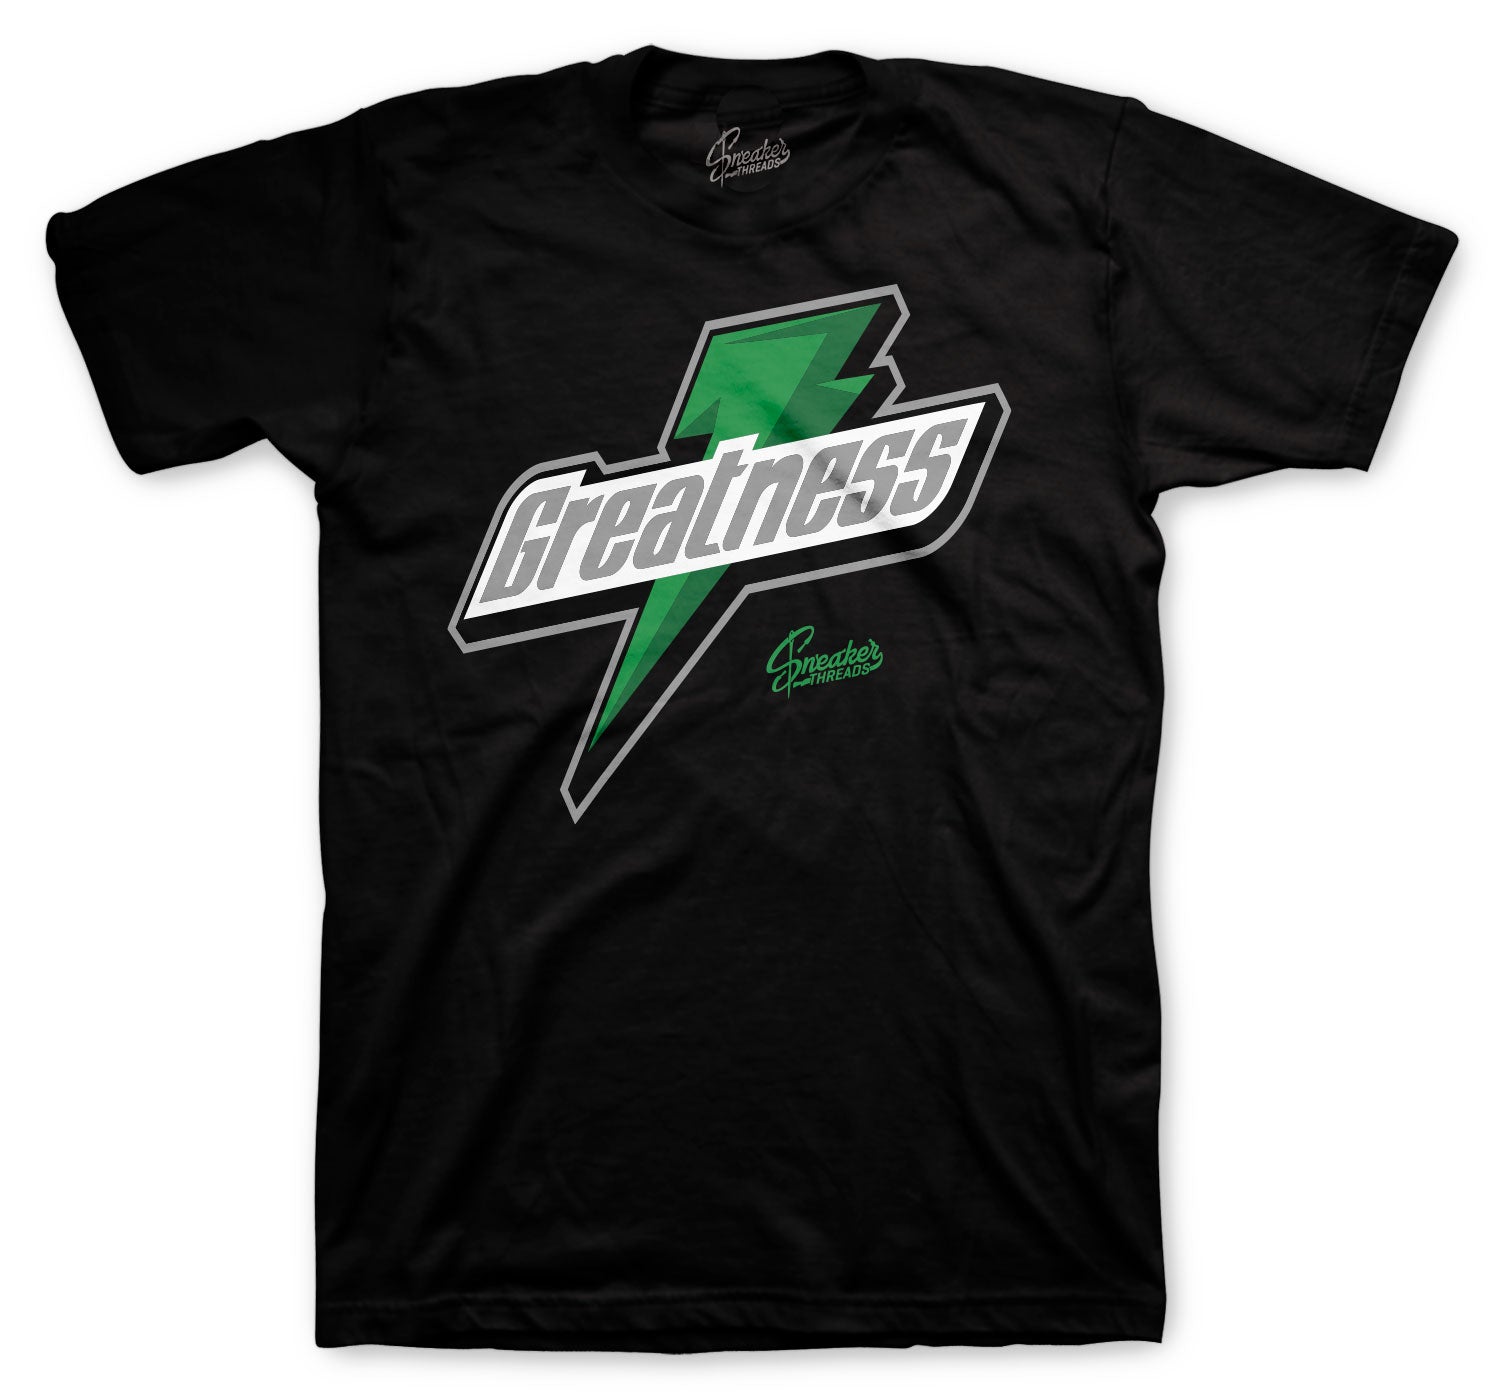 Retro 3 Pine Green Shirt - Greatness - Black